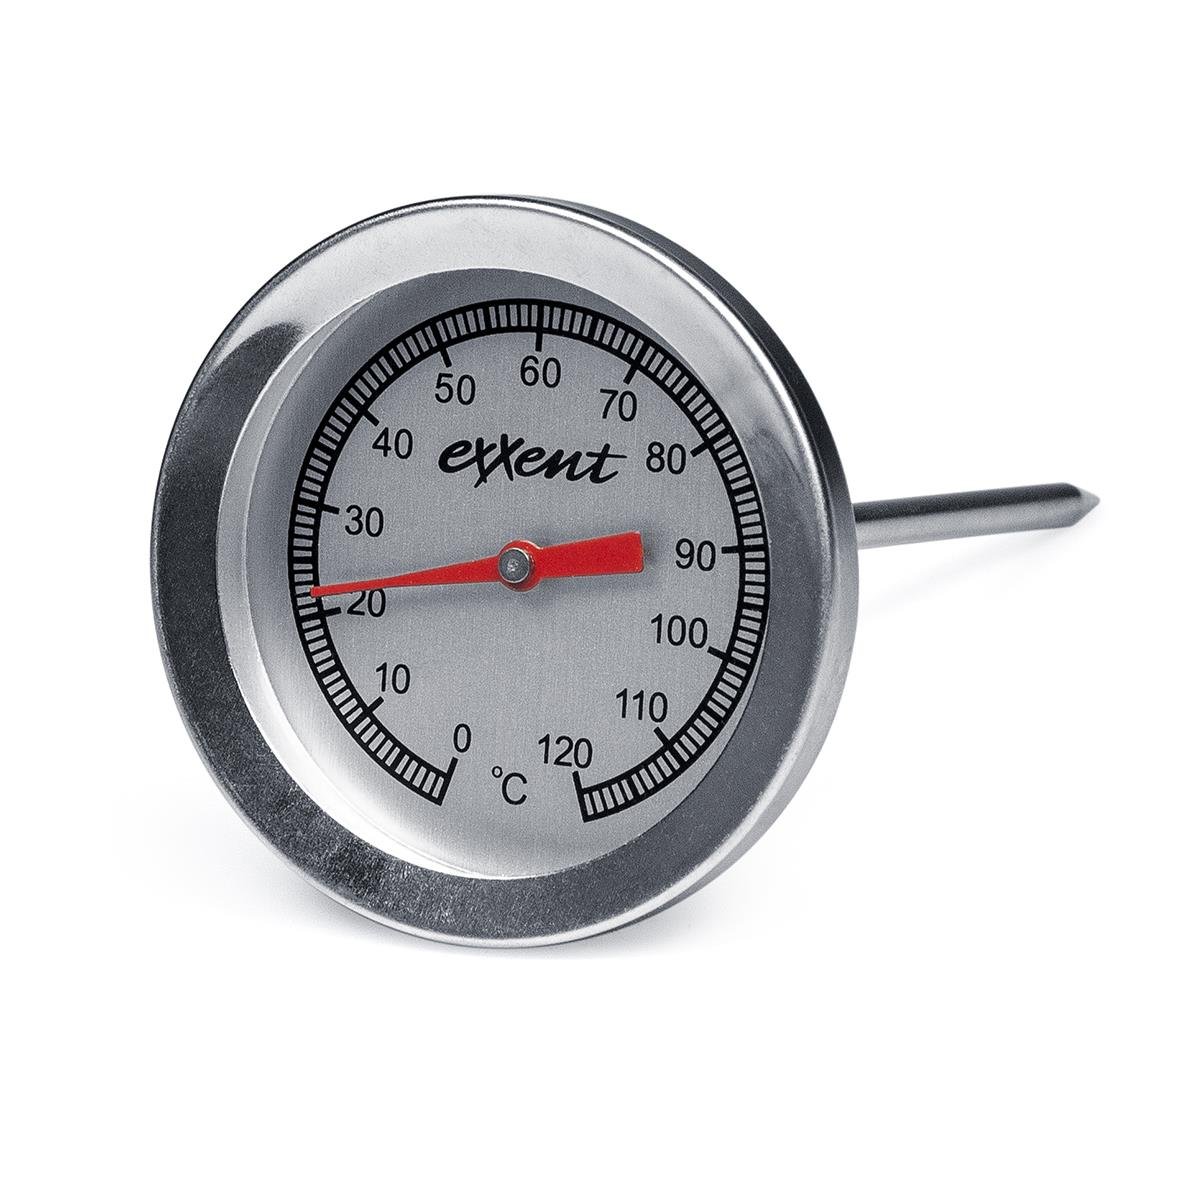 Stektermometer Exxent